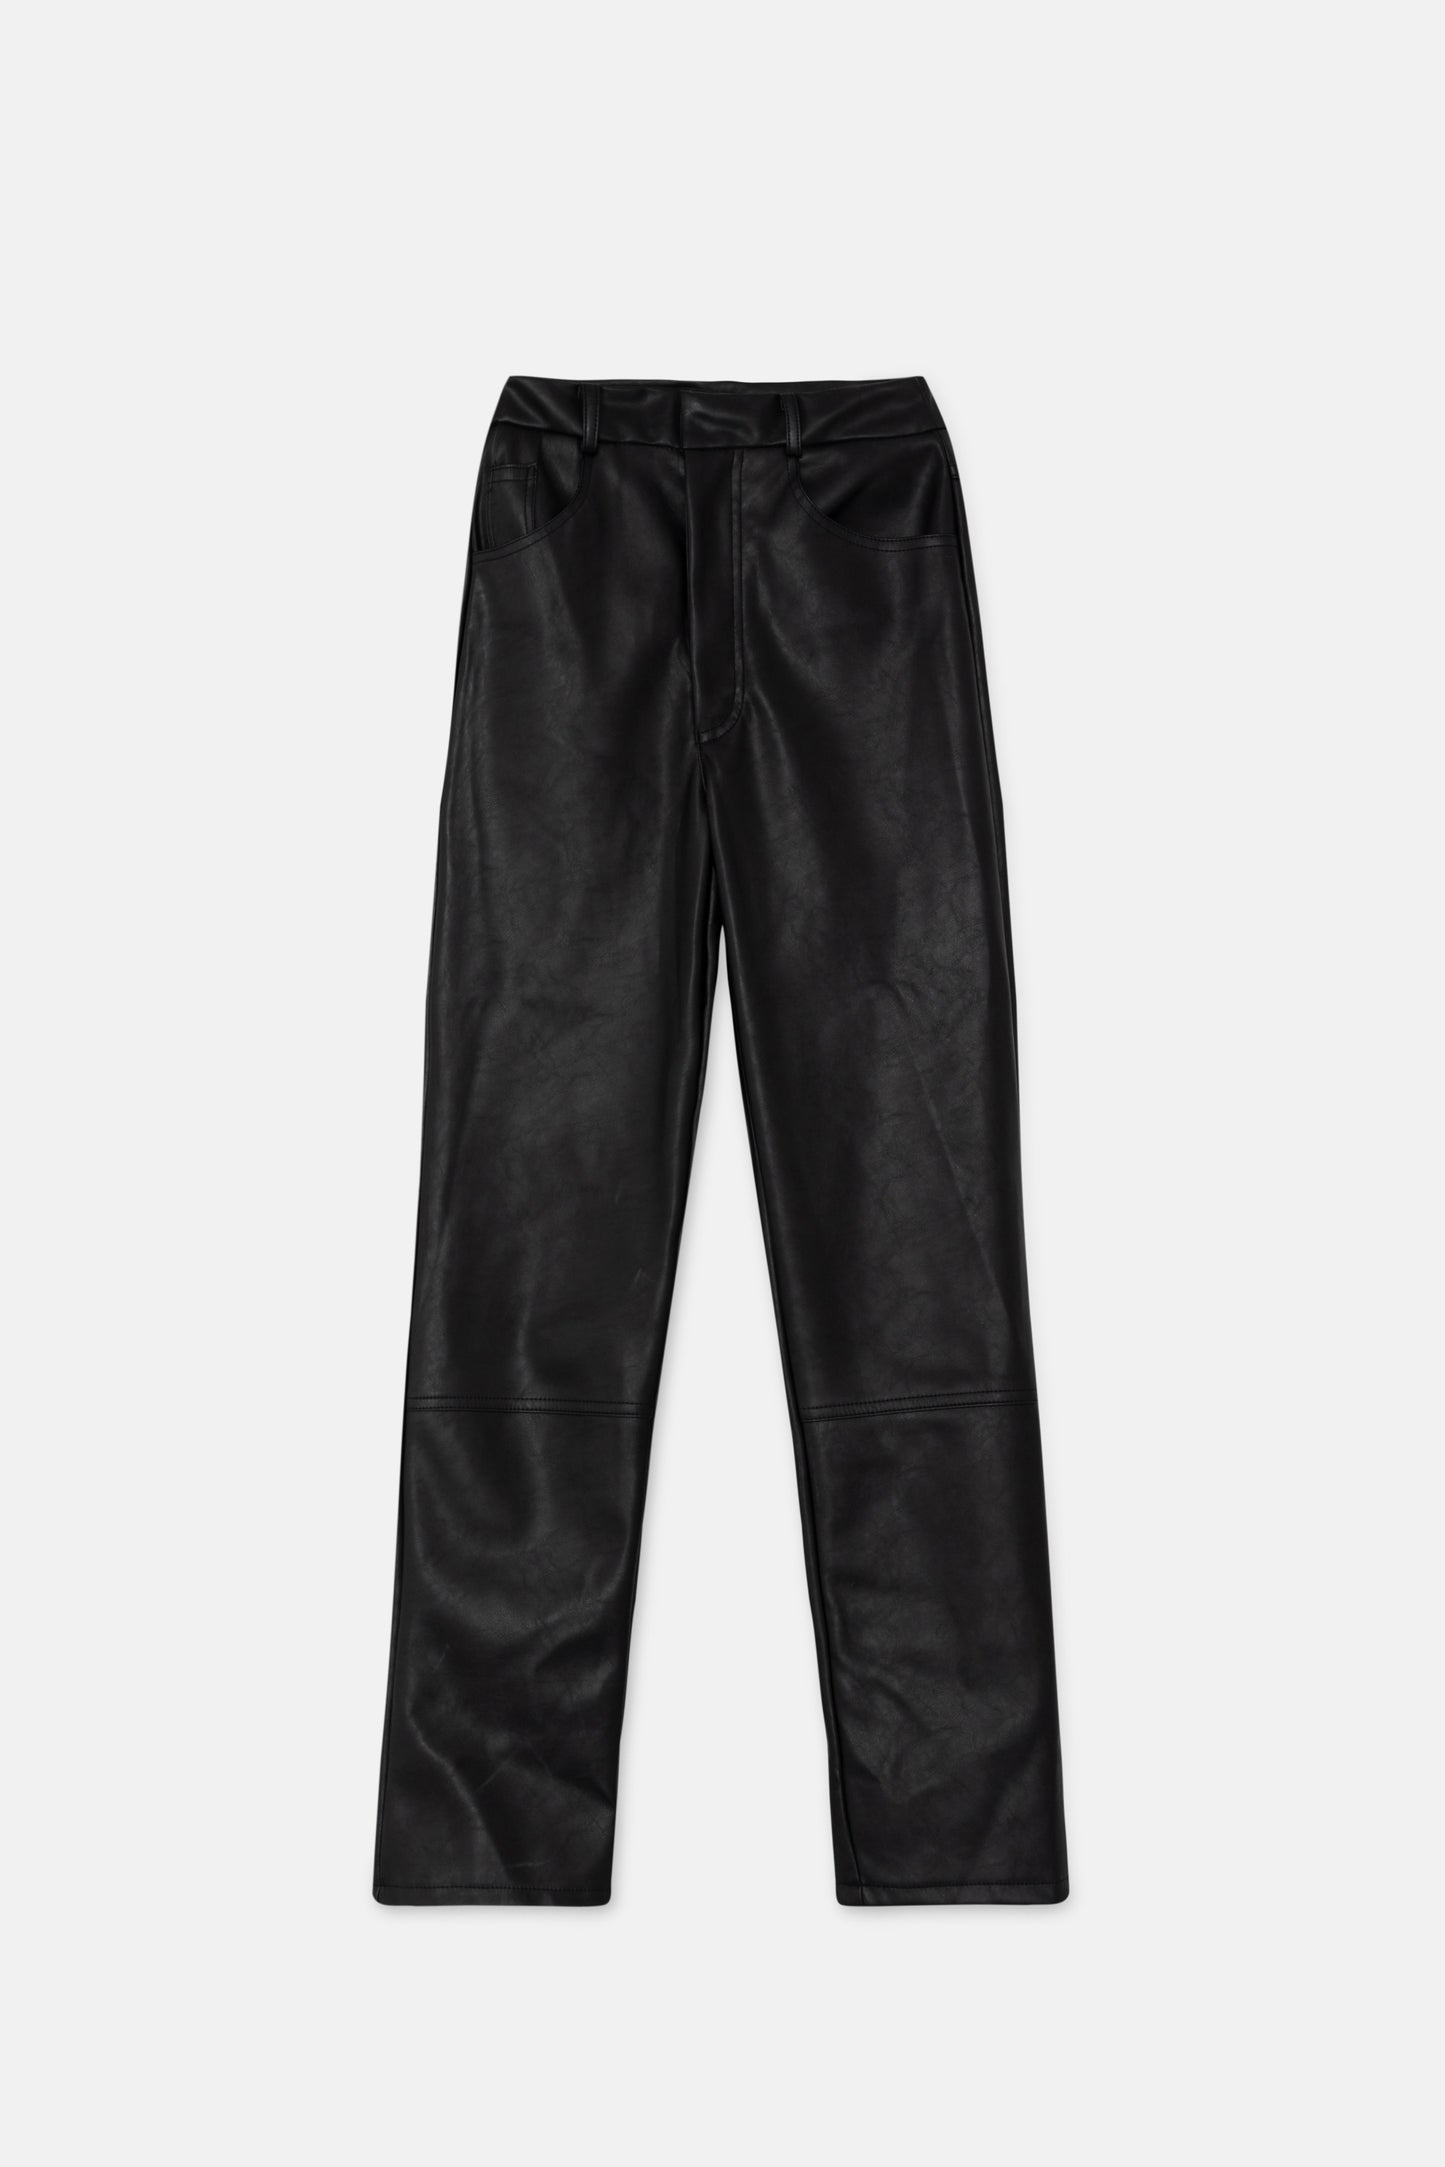 Long straight black faux leather pants